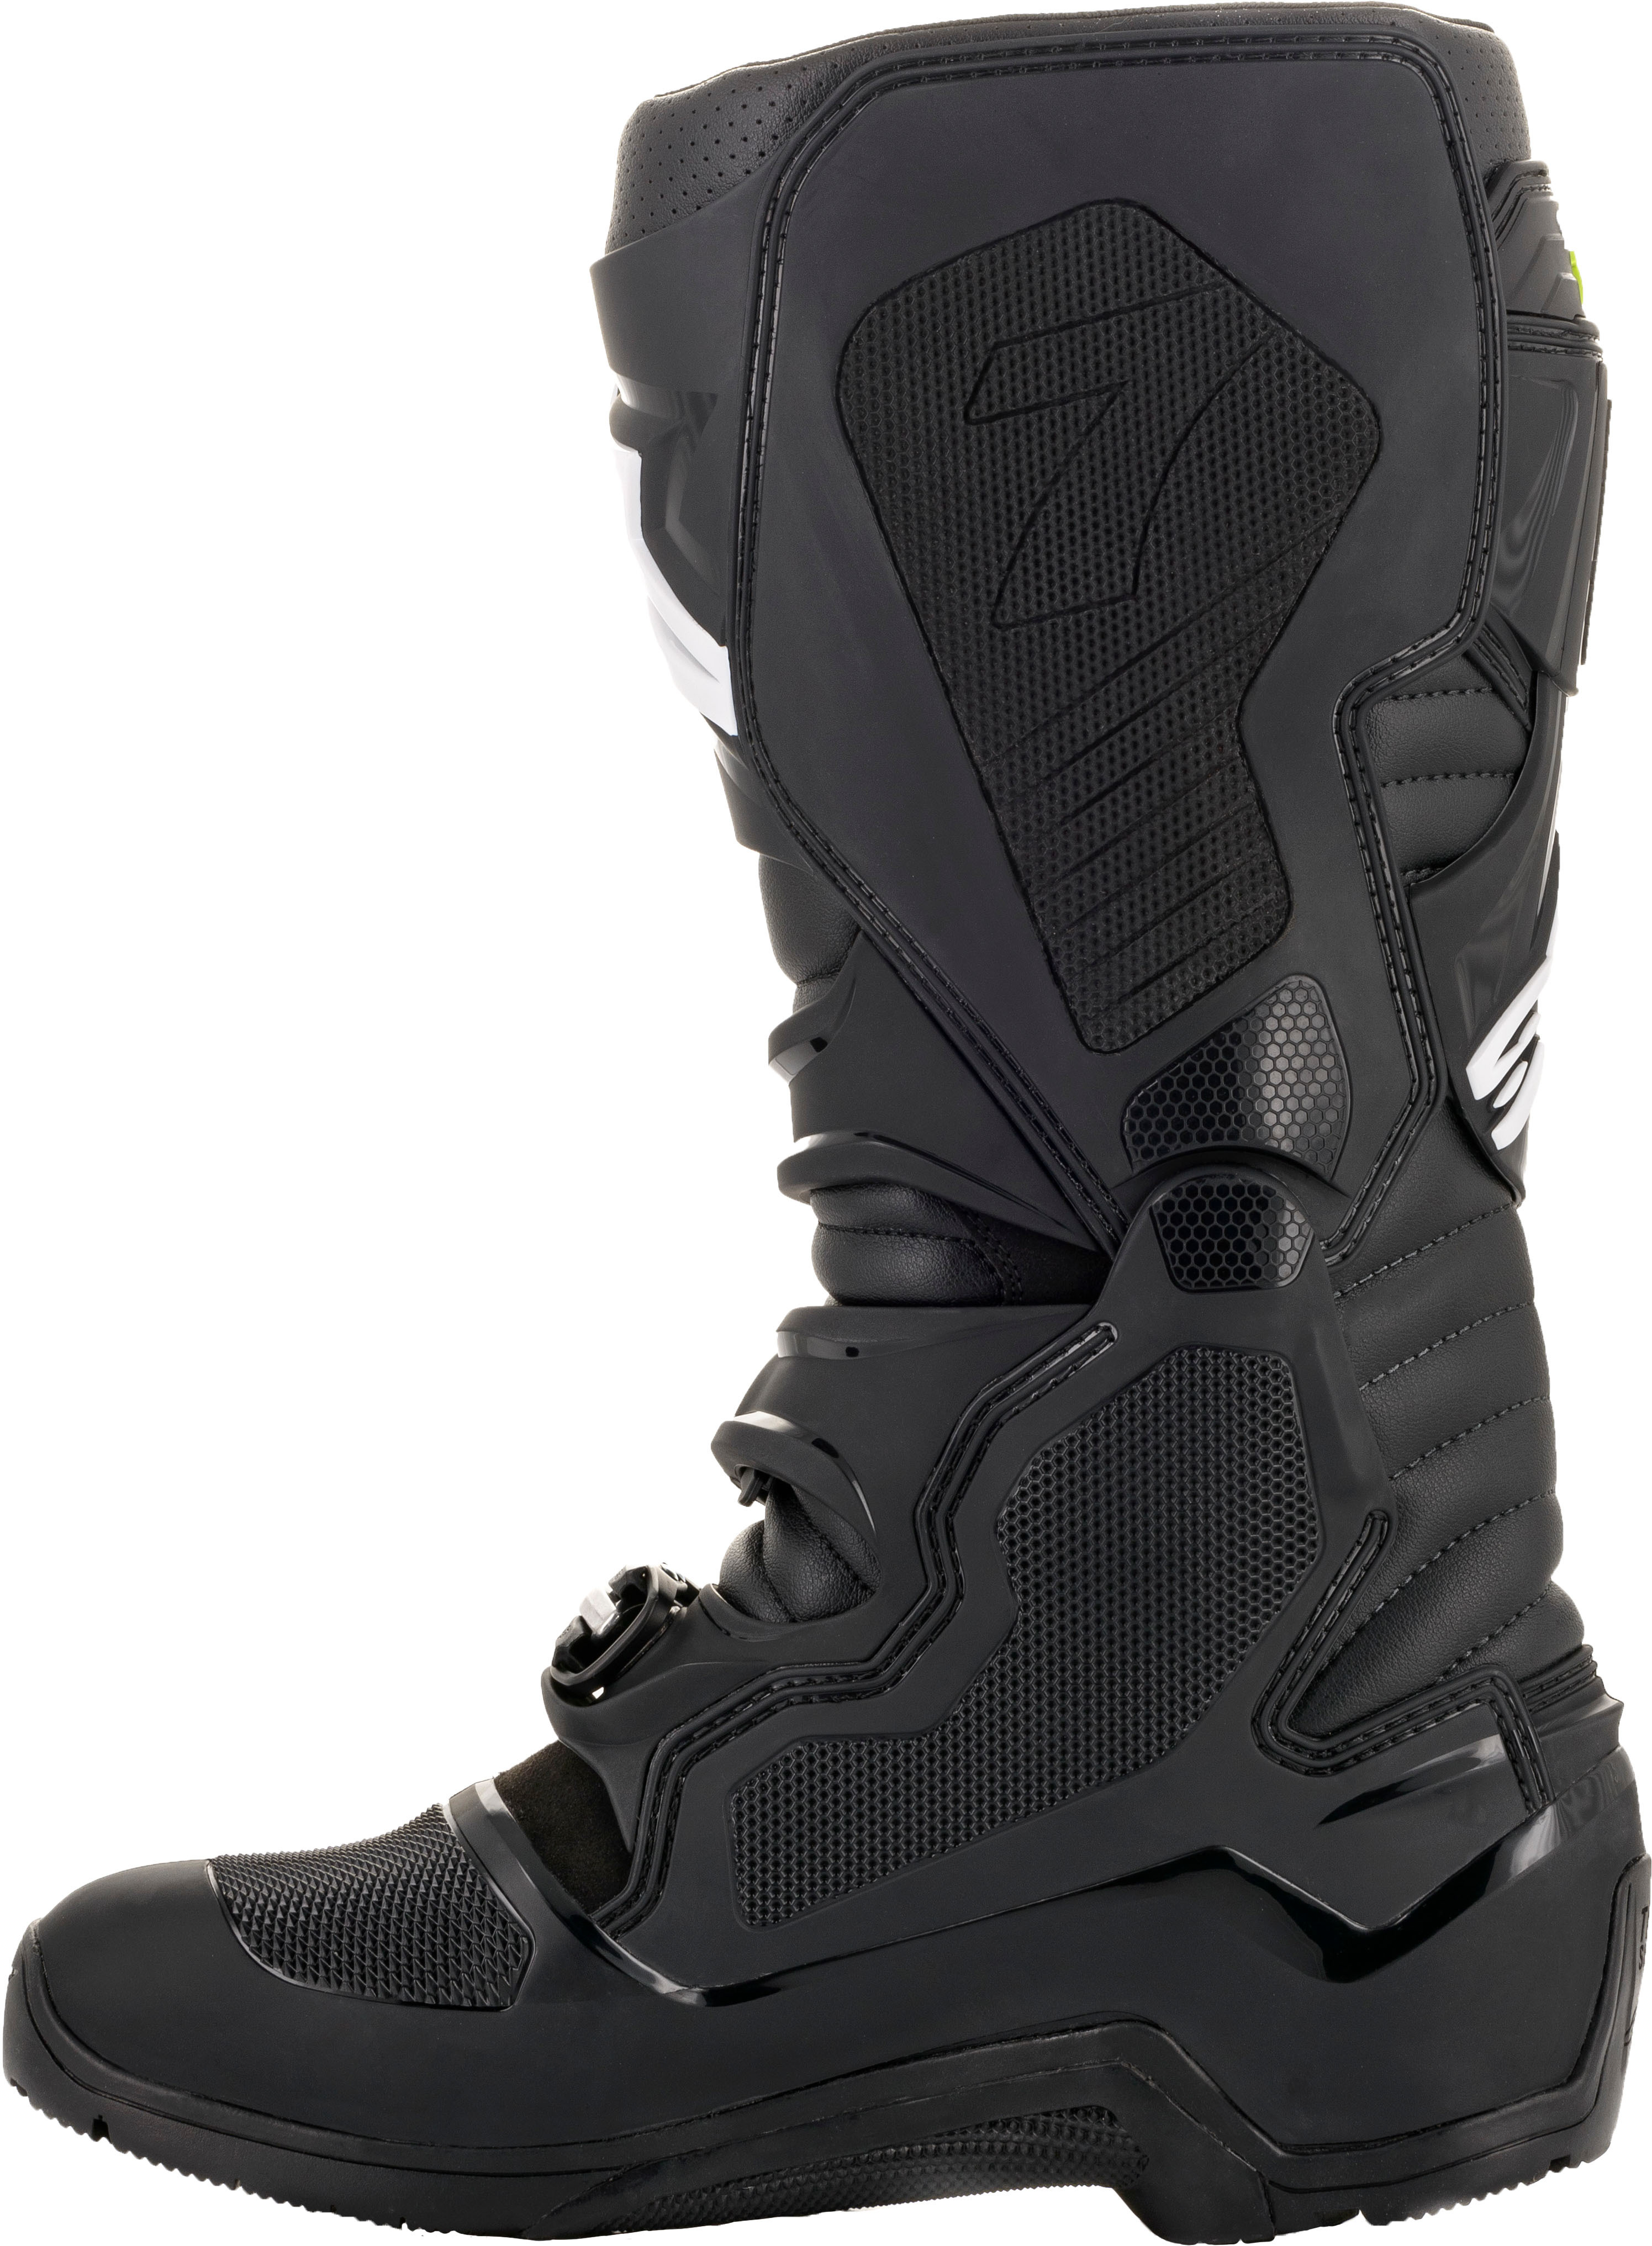 Tech 7 Enduro Drystar Boots Black/Grey US 14 - Click Image to Close